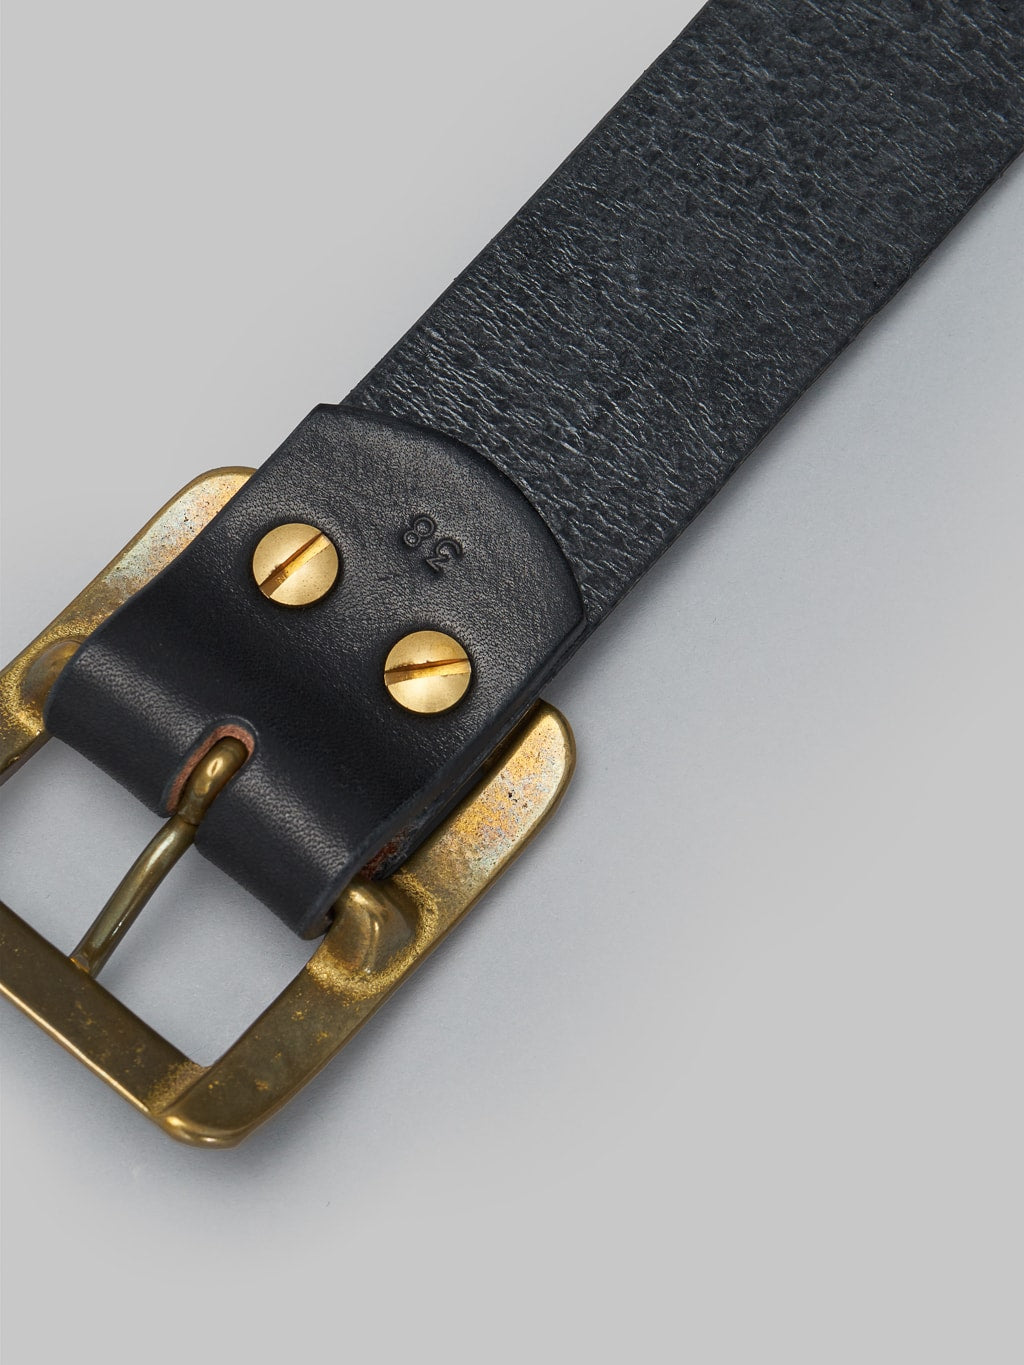 the strike gold leather black belt solid brass